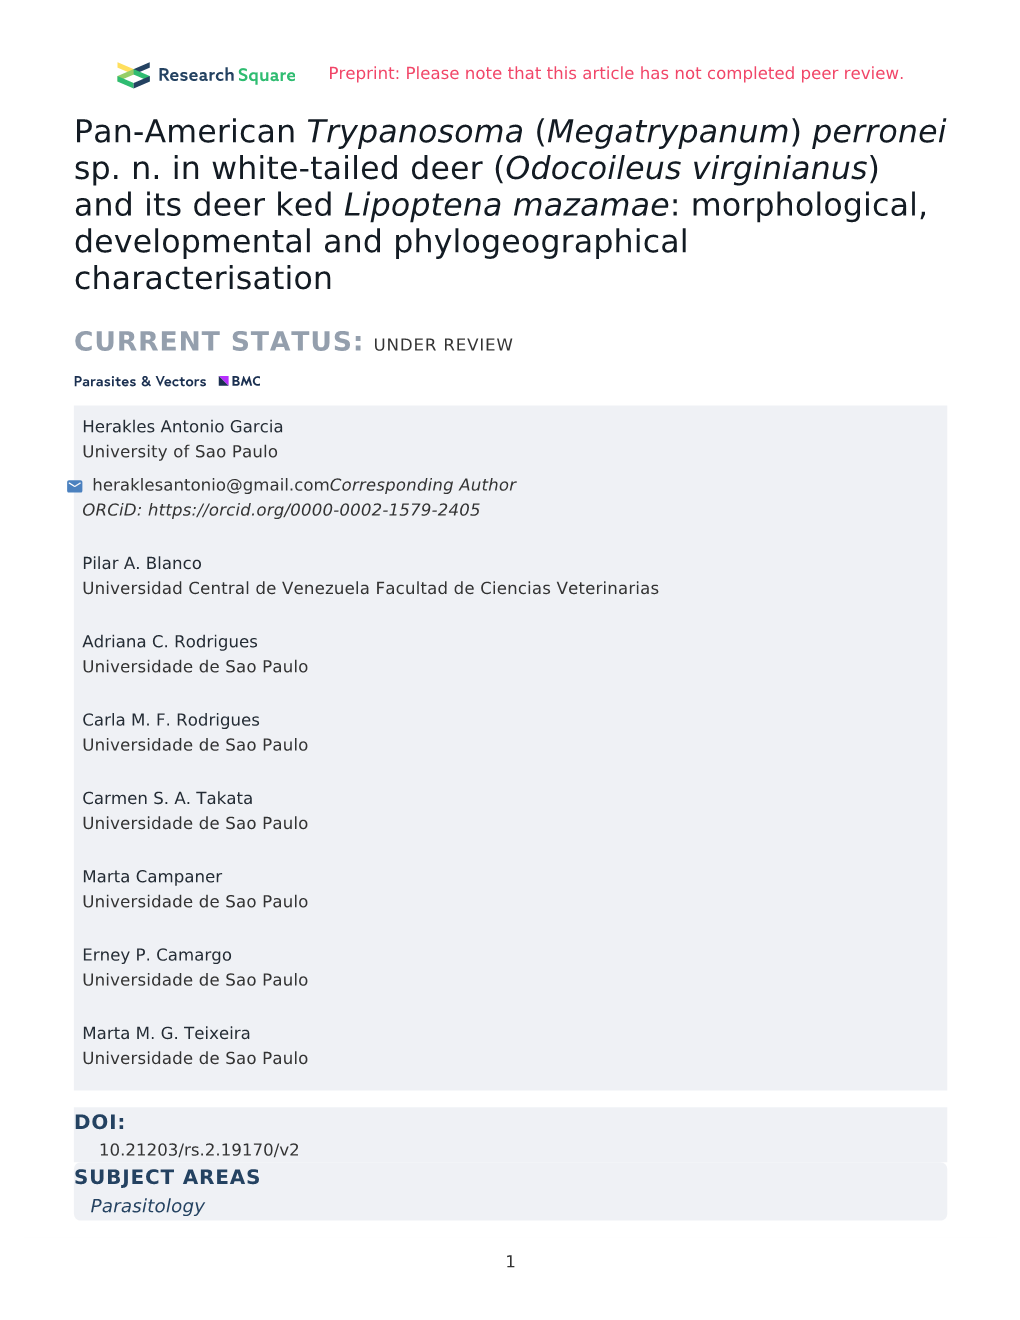 Odocoileus Virginianus) and Its Deer Ked Lipoptena Mazamae: Morphological, Developmental and Phylogeographical Characterisation